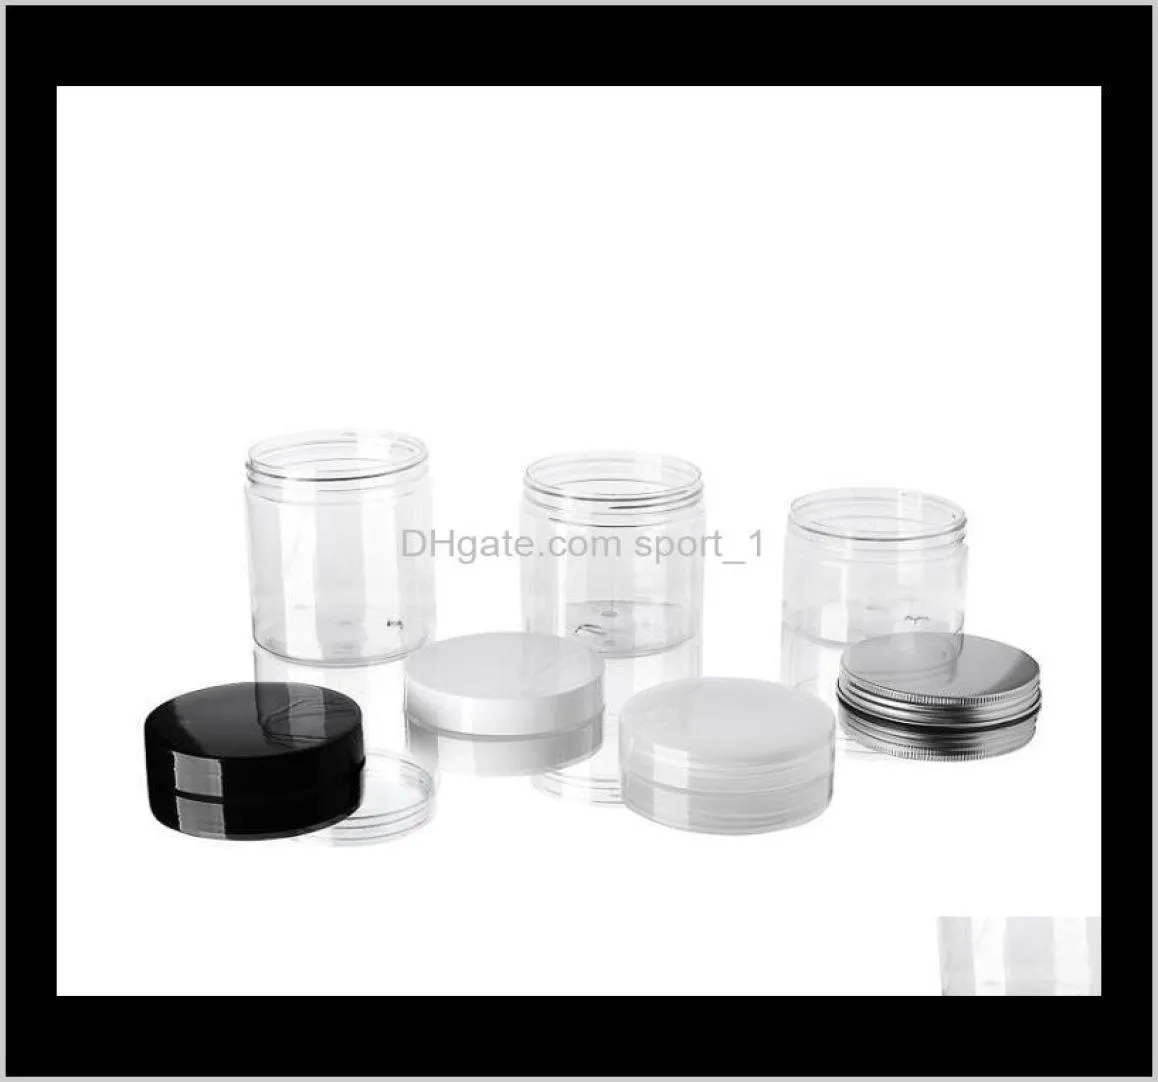 Garrafa redonda de latas de animais transparentes de 60 ml com tampas de contêiner de jarro de cosméticos vazios Ho1384 garrafas 50AAH YVKTA3275402